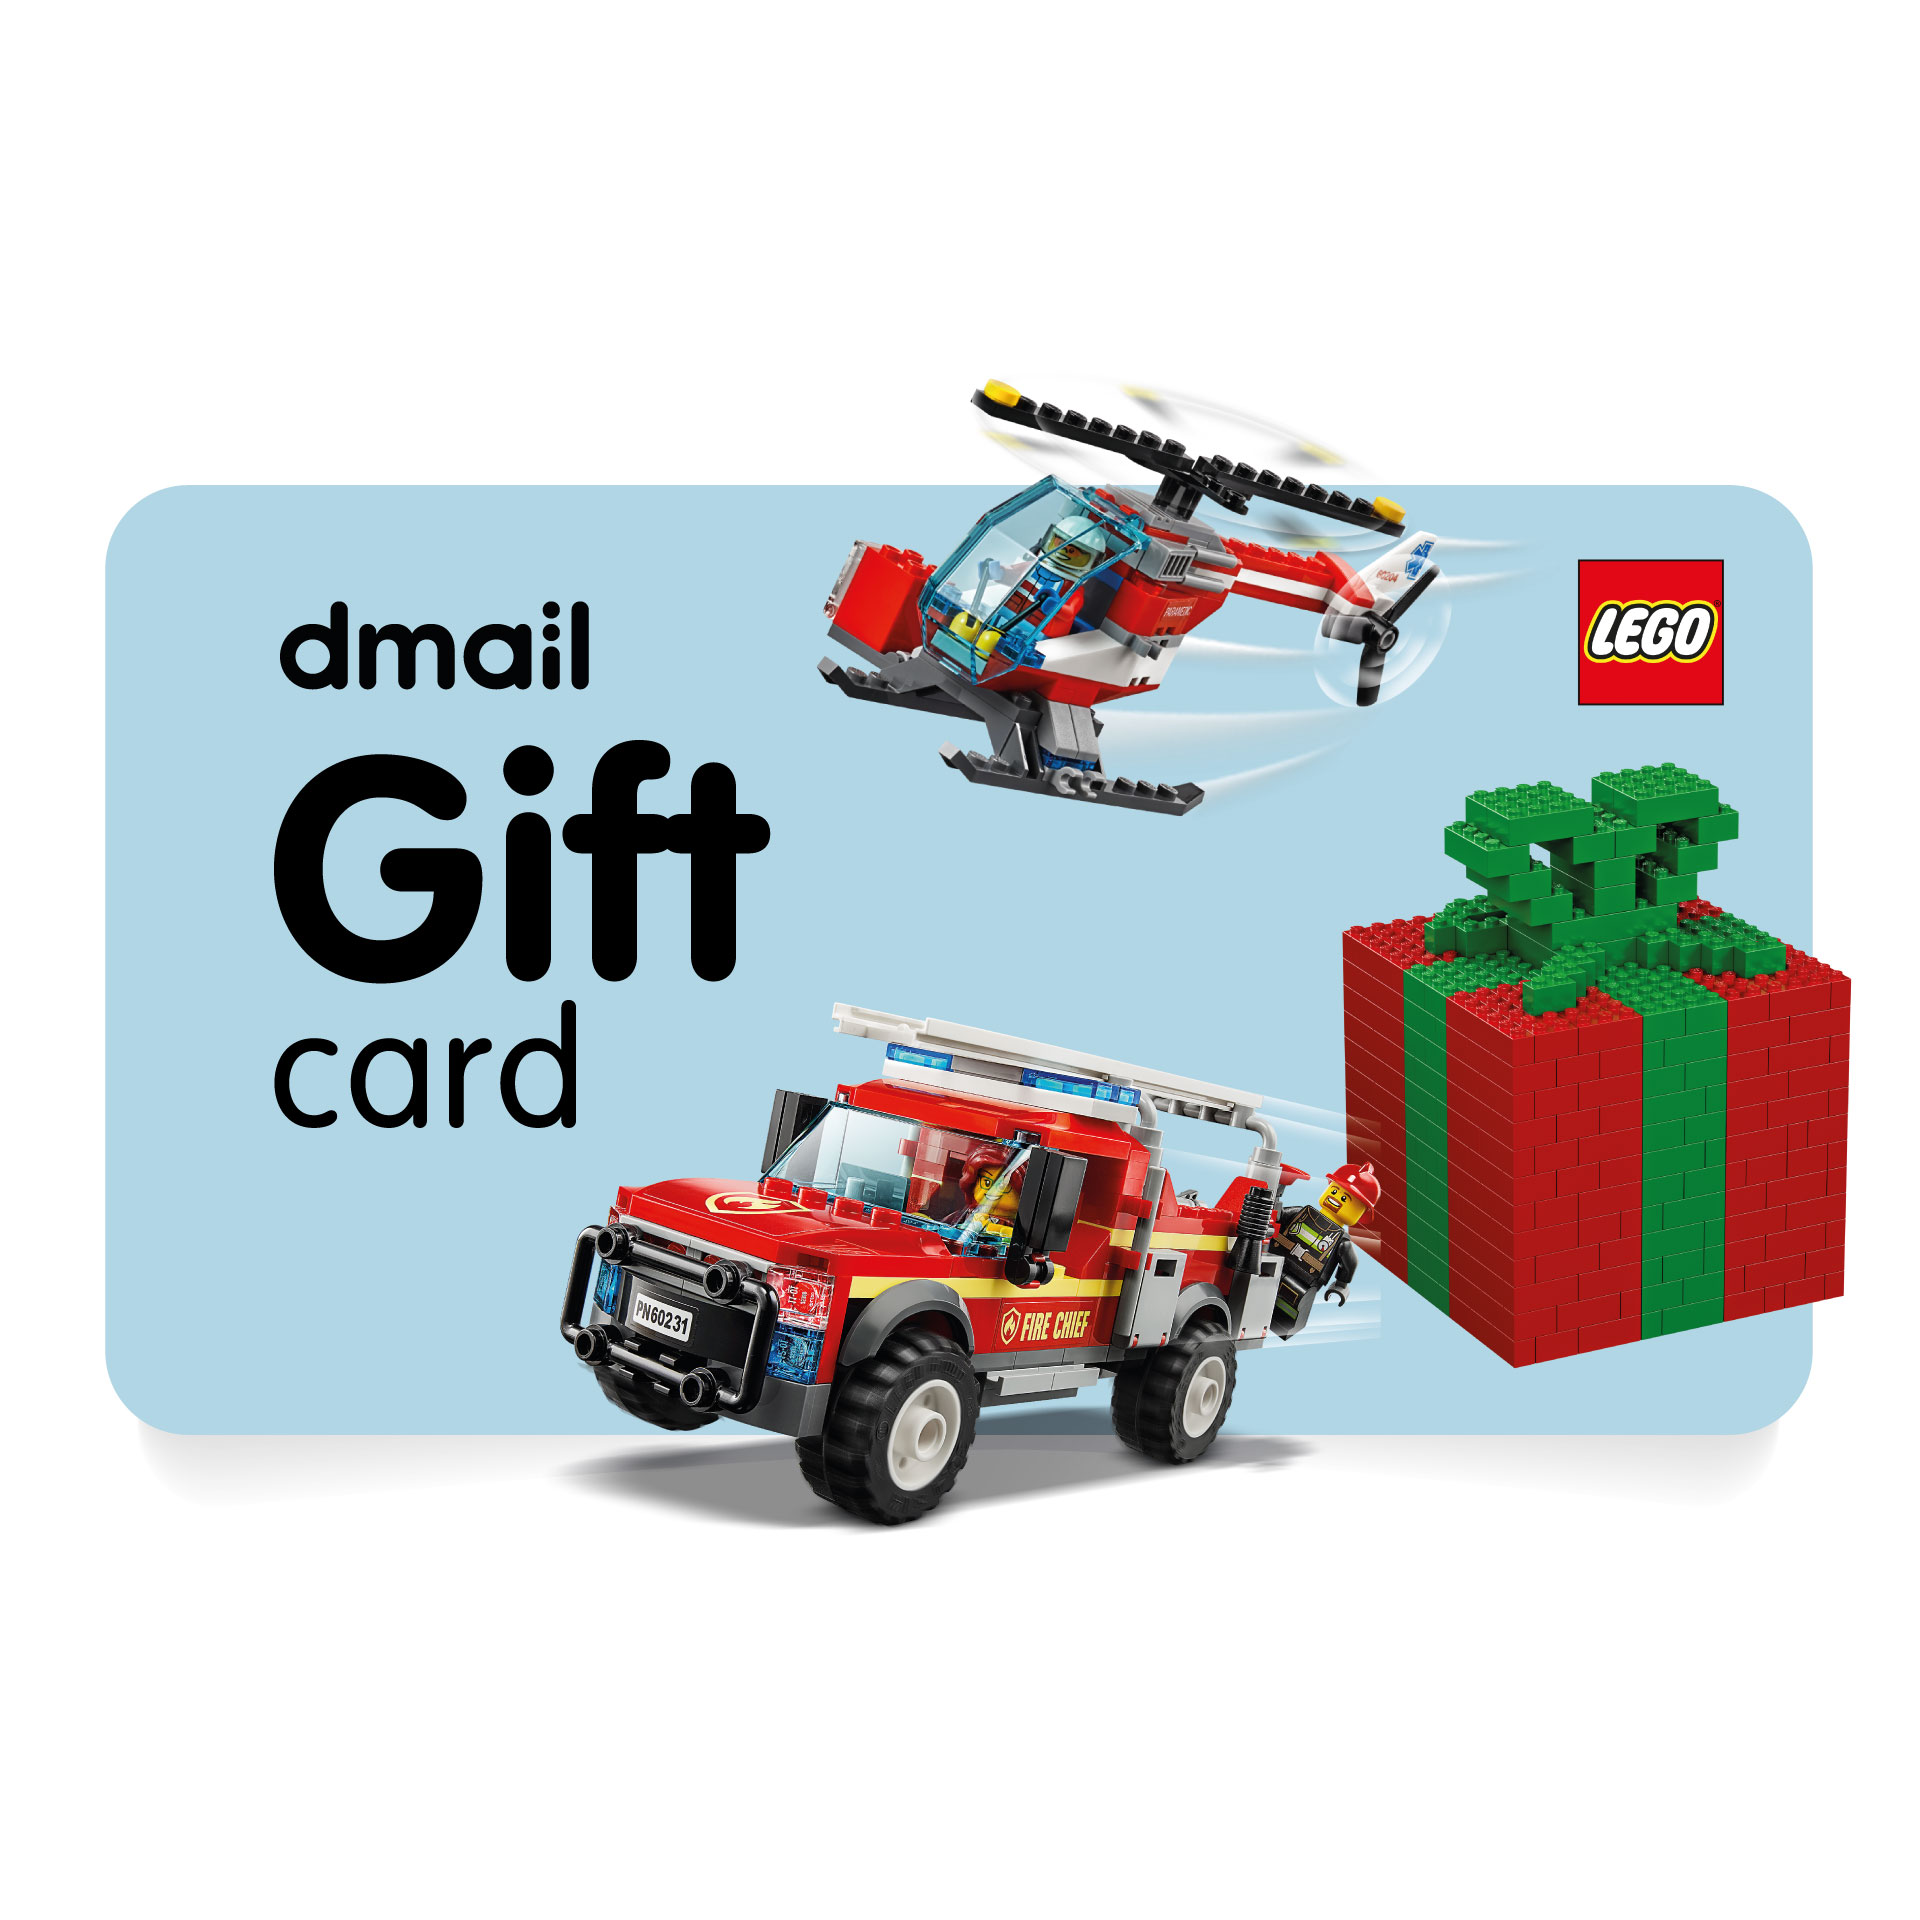 gift_card_dmail_LEGO.jpg